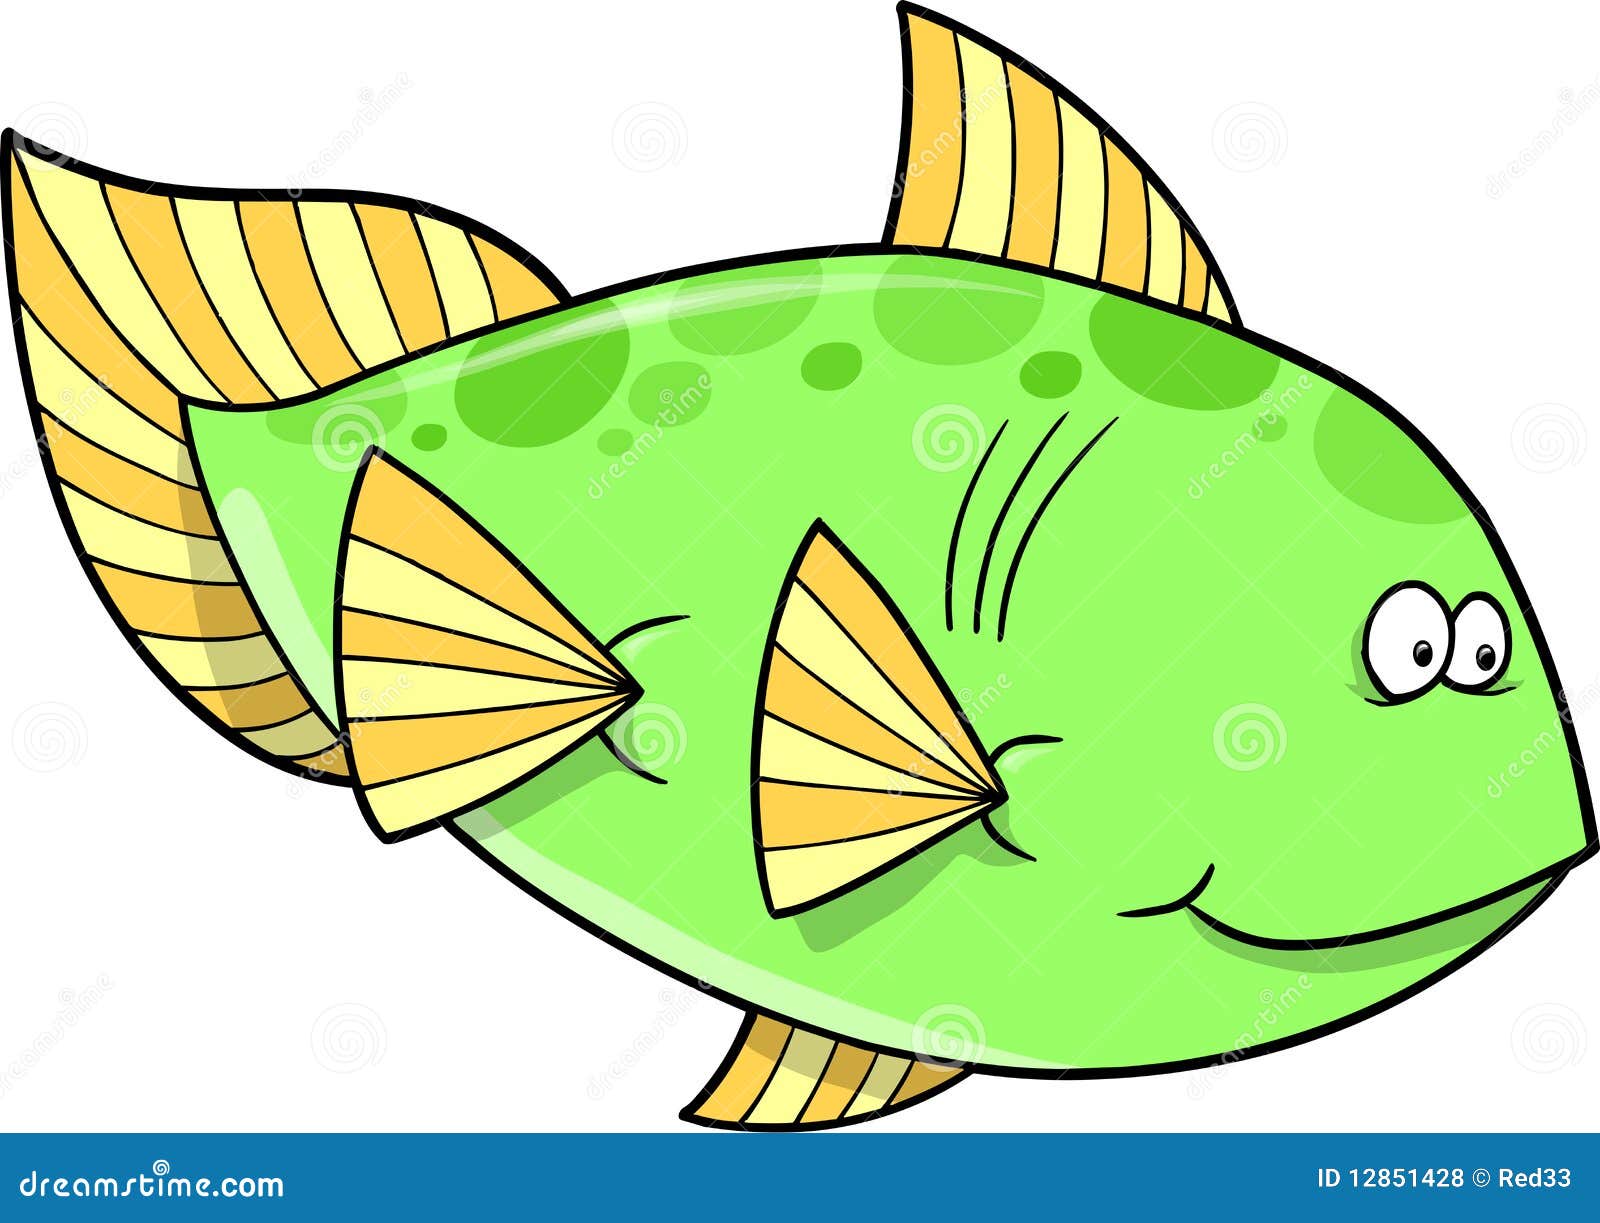 green fish clip art - photo #45